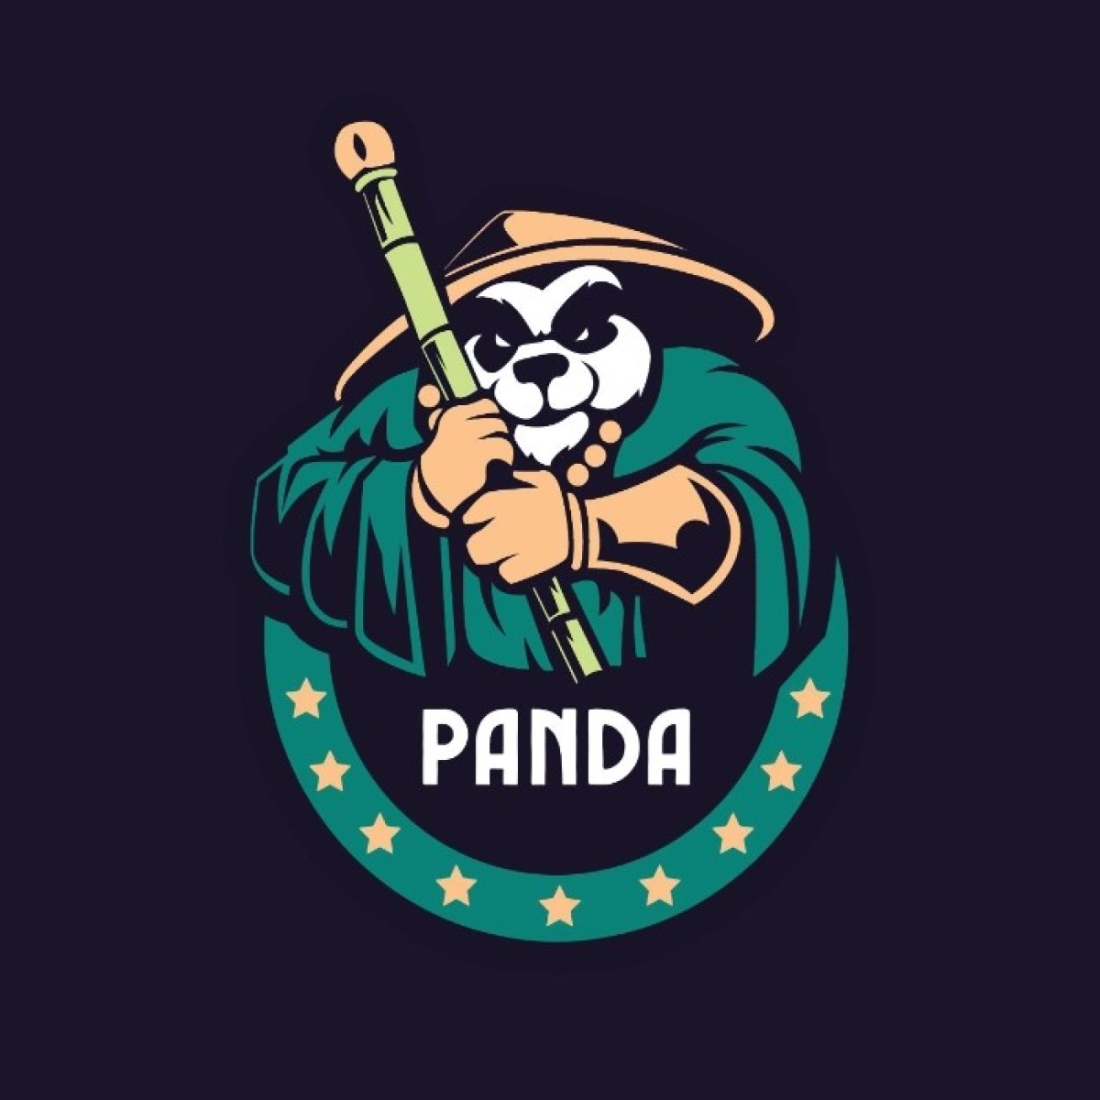 Ninja Panda logo cover image.